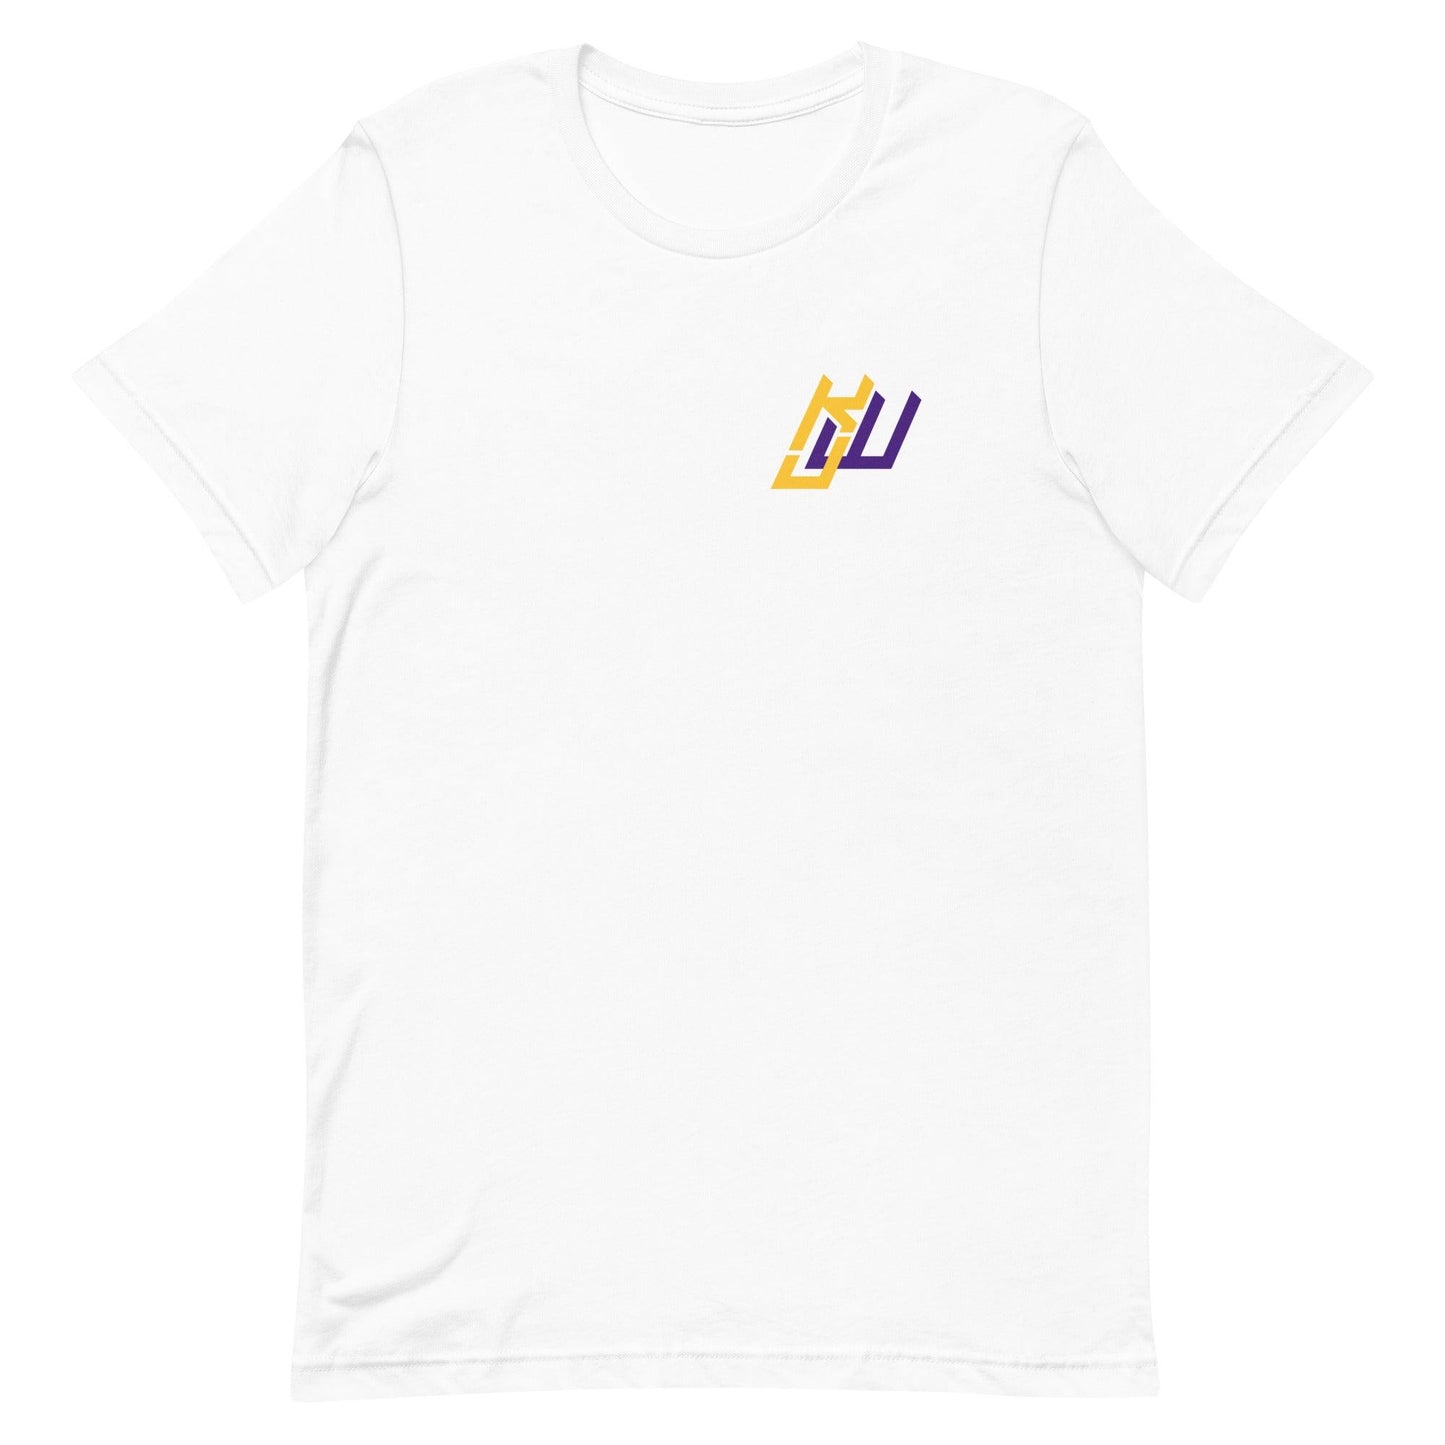 KJ Williams "Elite" t-shirt - Fan Arch